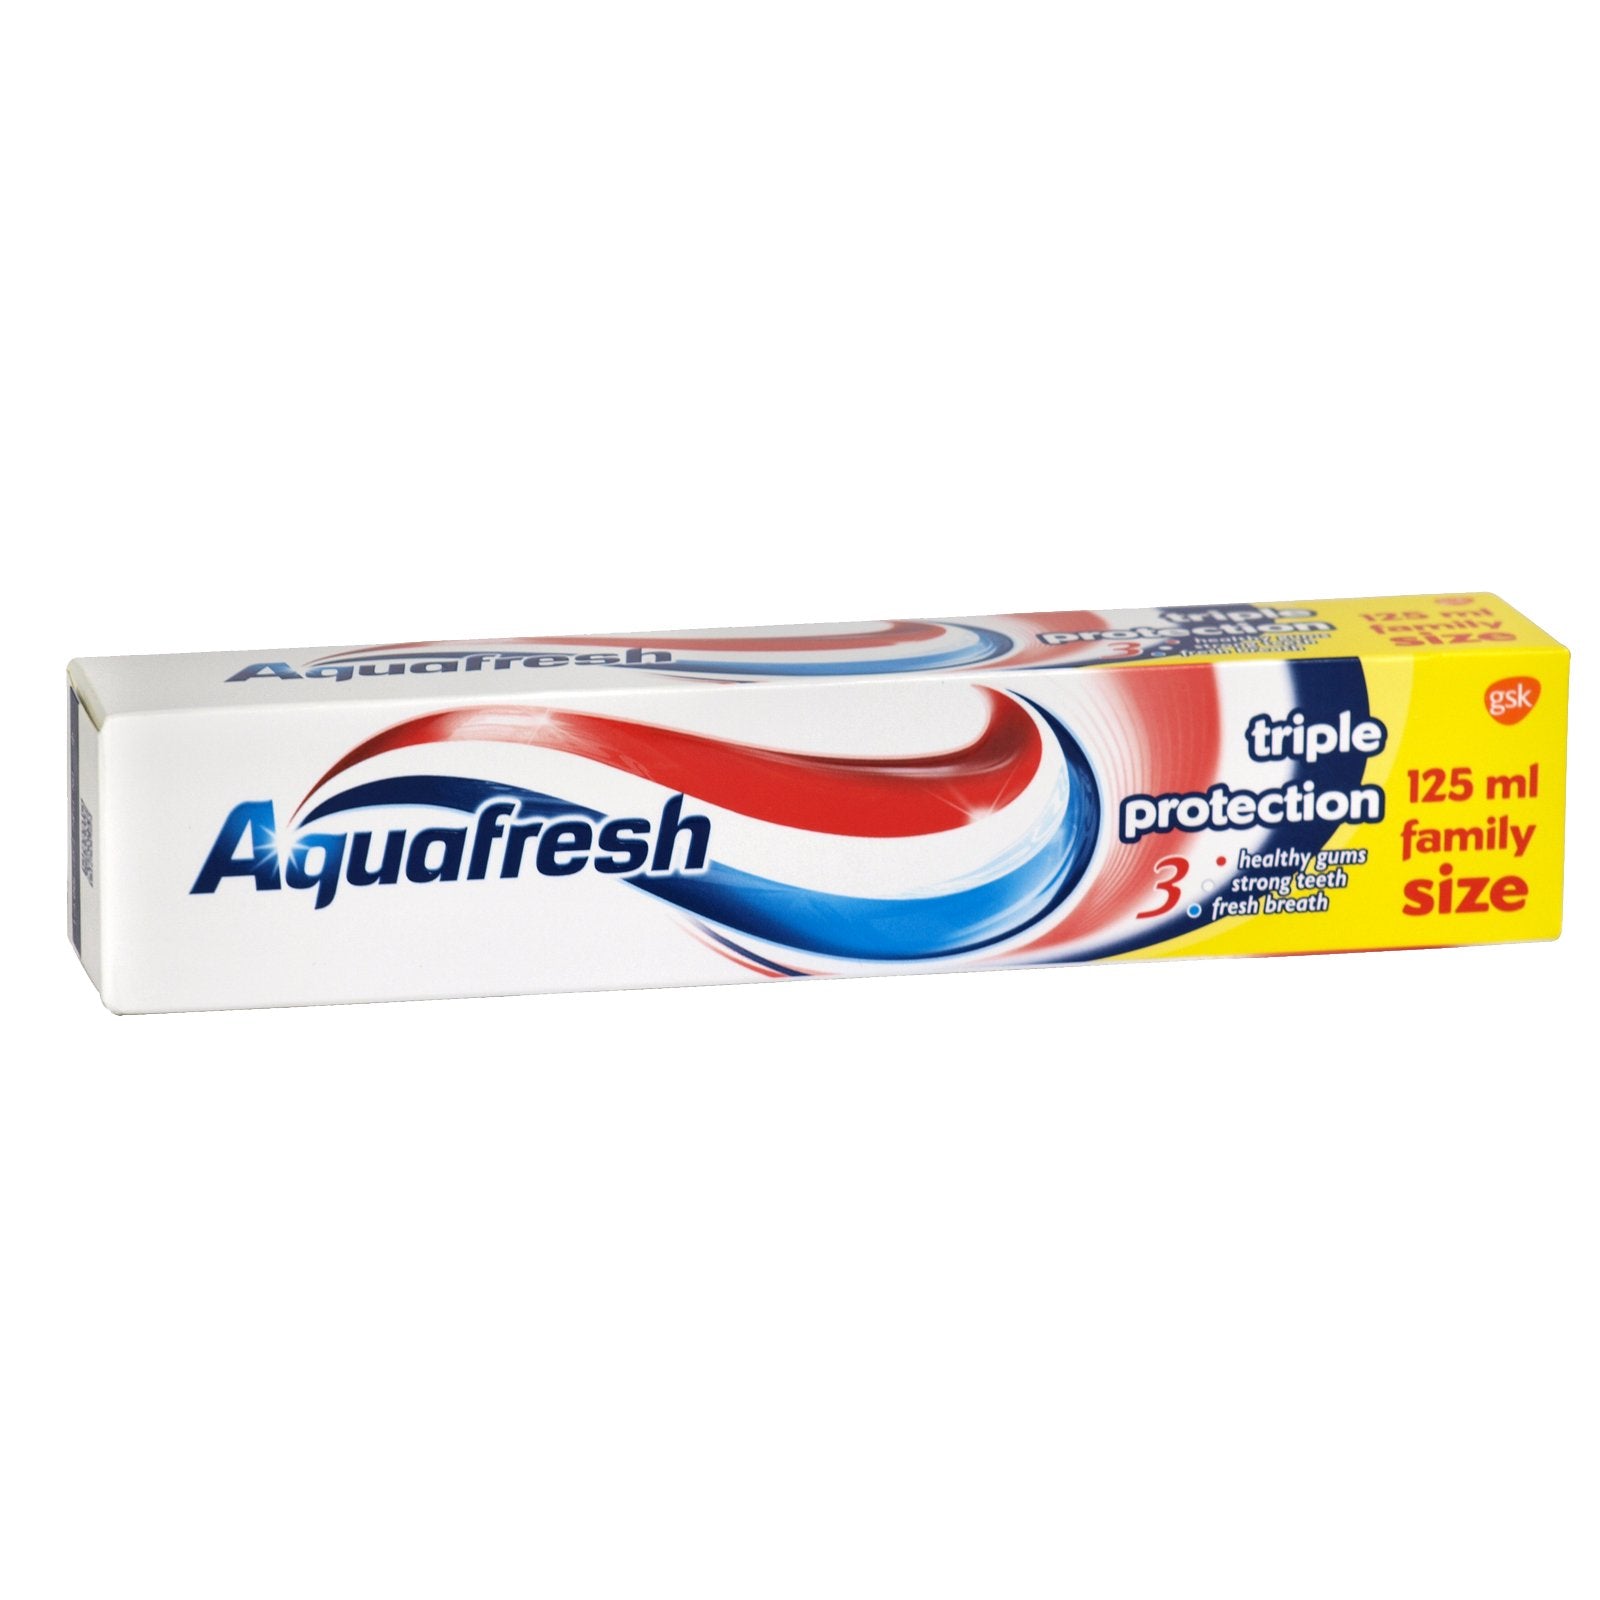 Aquafresh - Tooth Paste - Triple Protection - 125ML